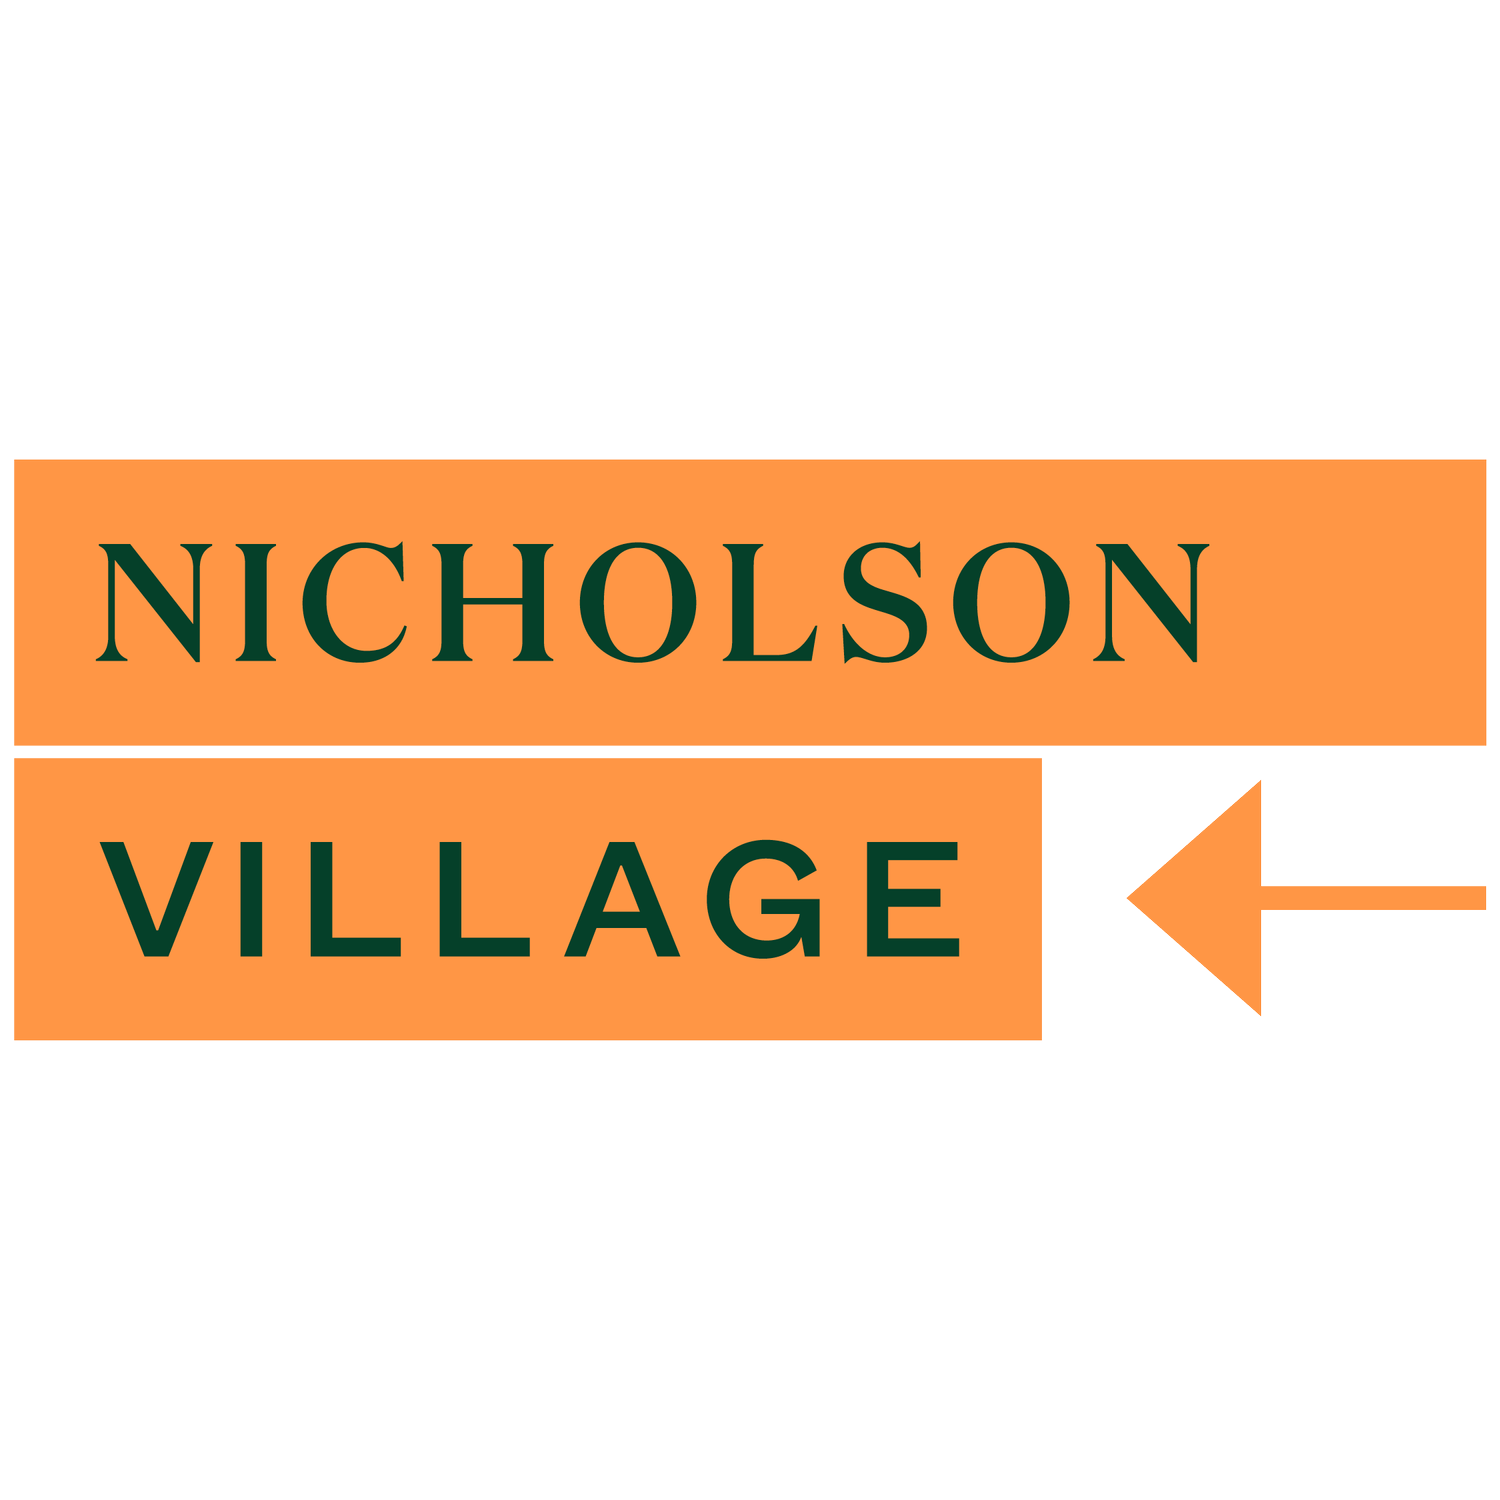 Everyday Nicholson